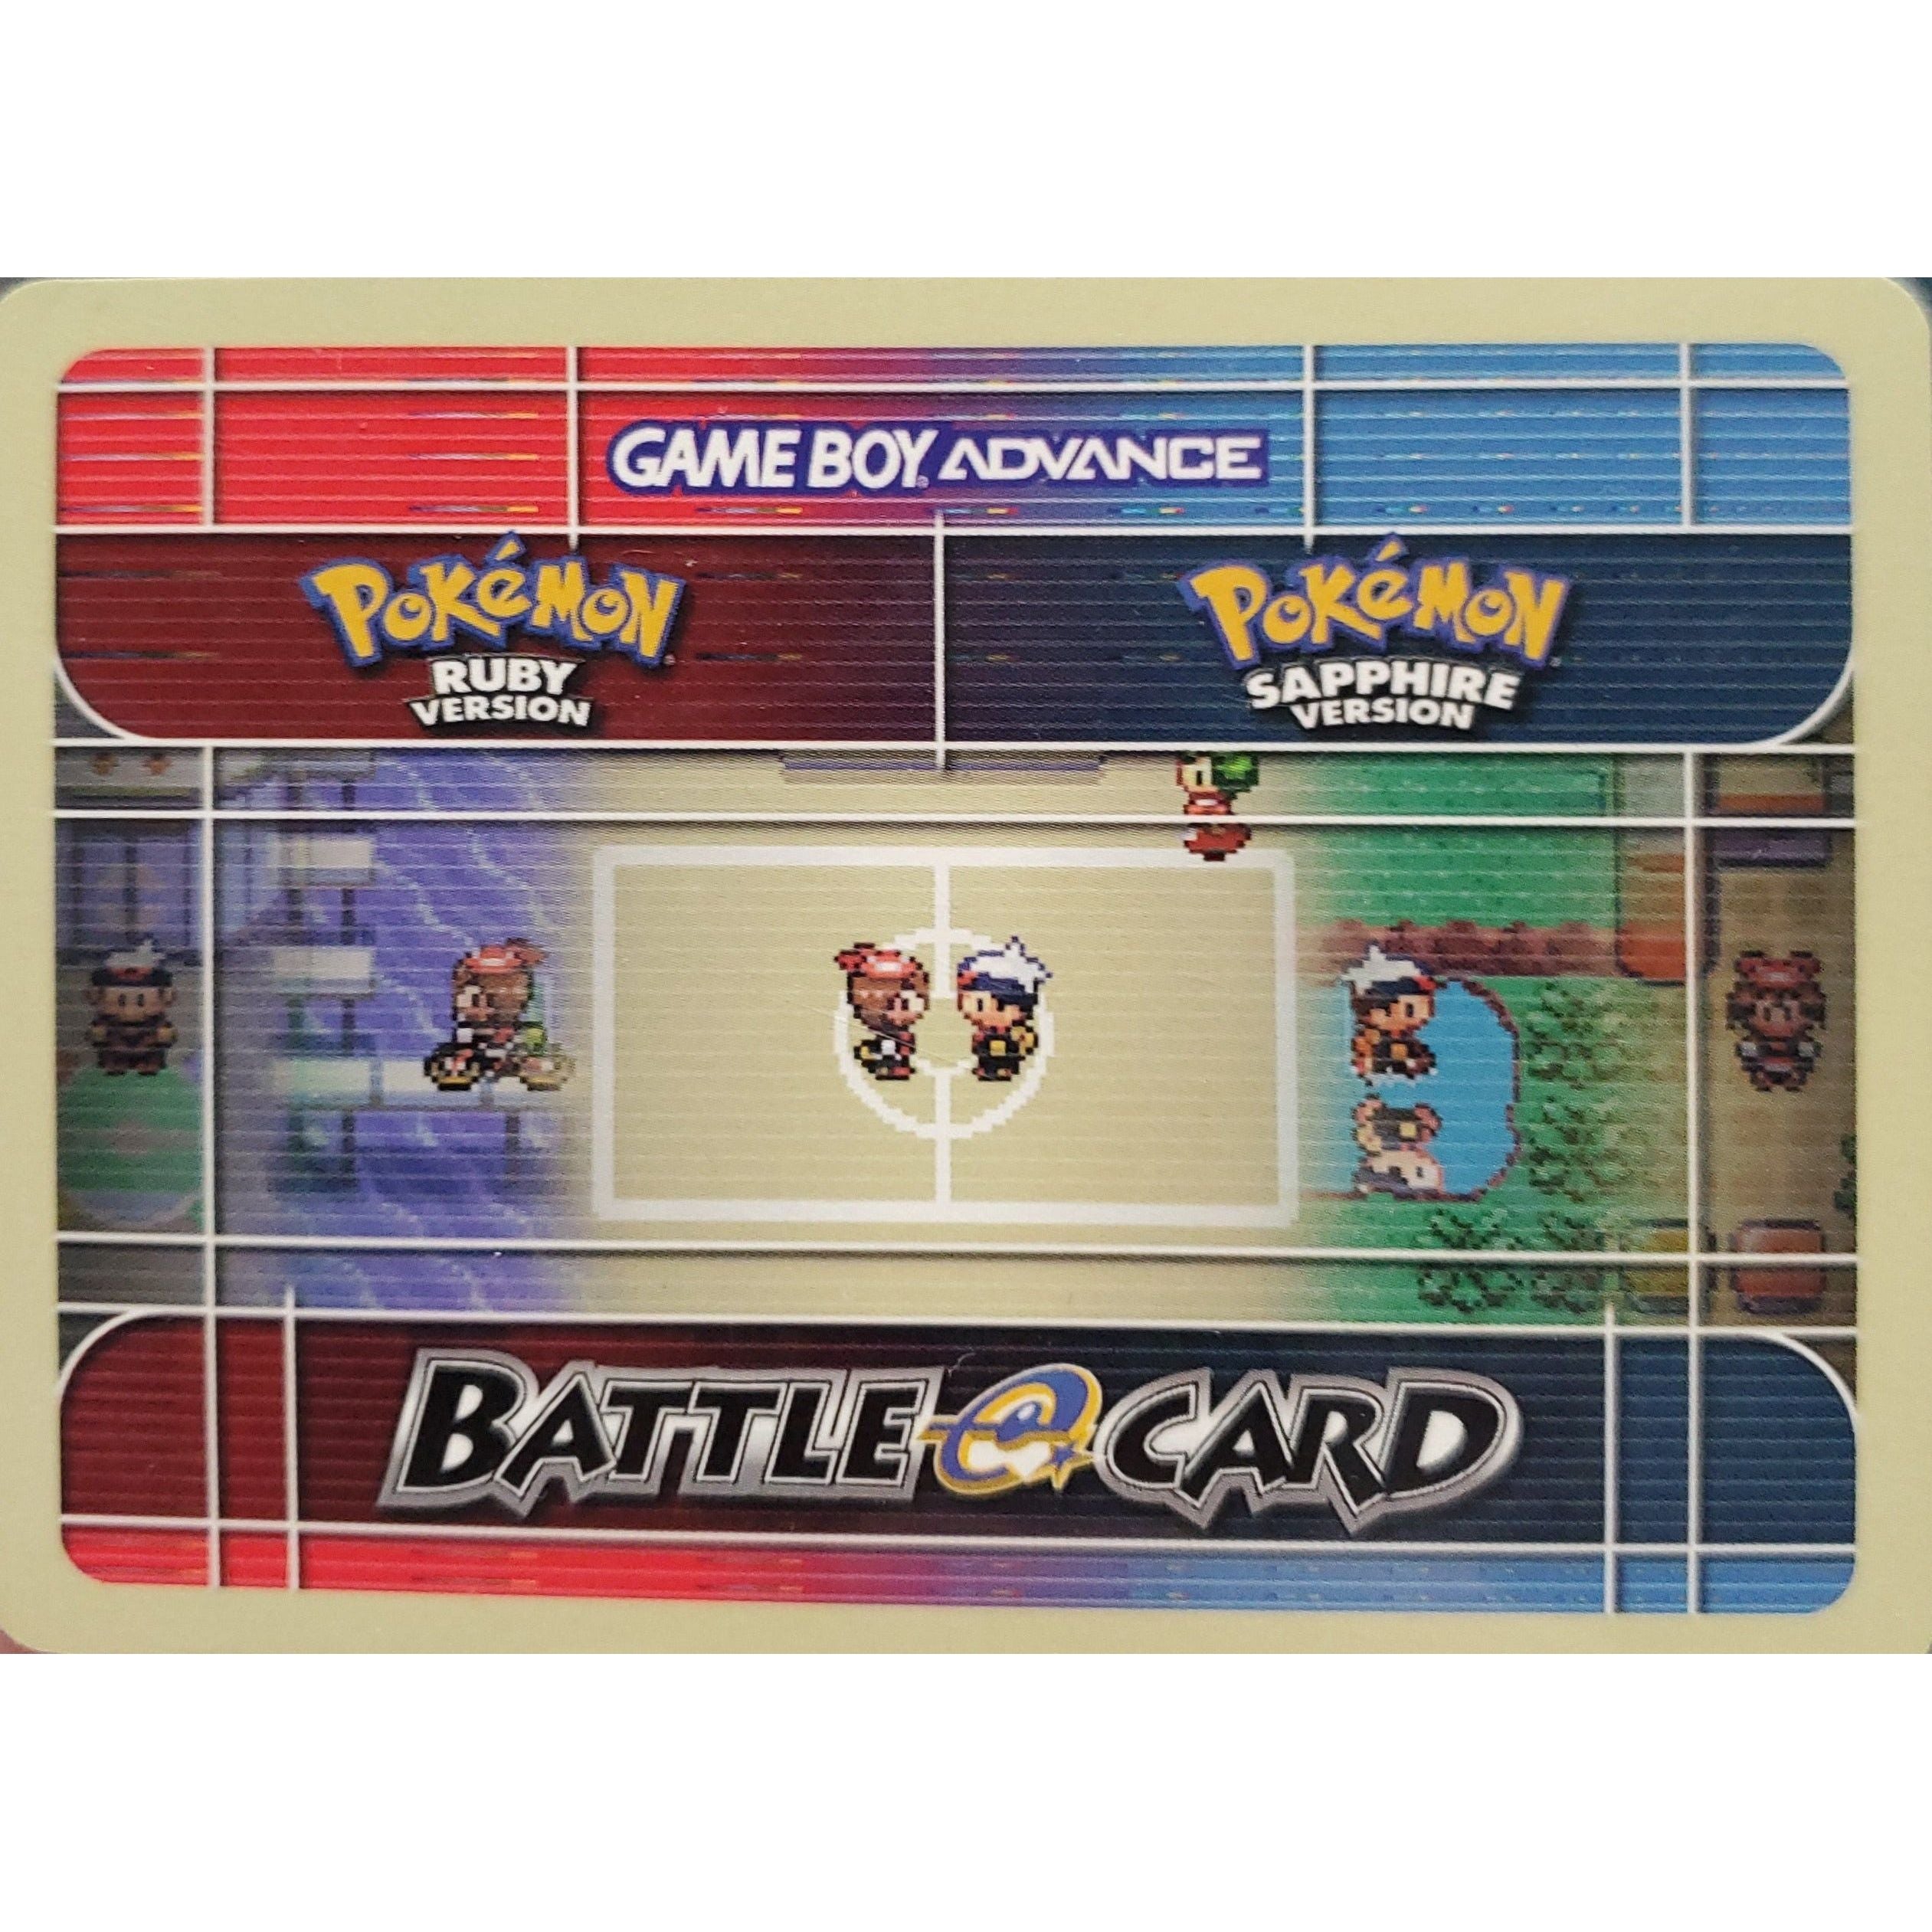 GBA - Pokemon Battle Card - Gentleman Antonio